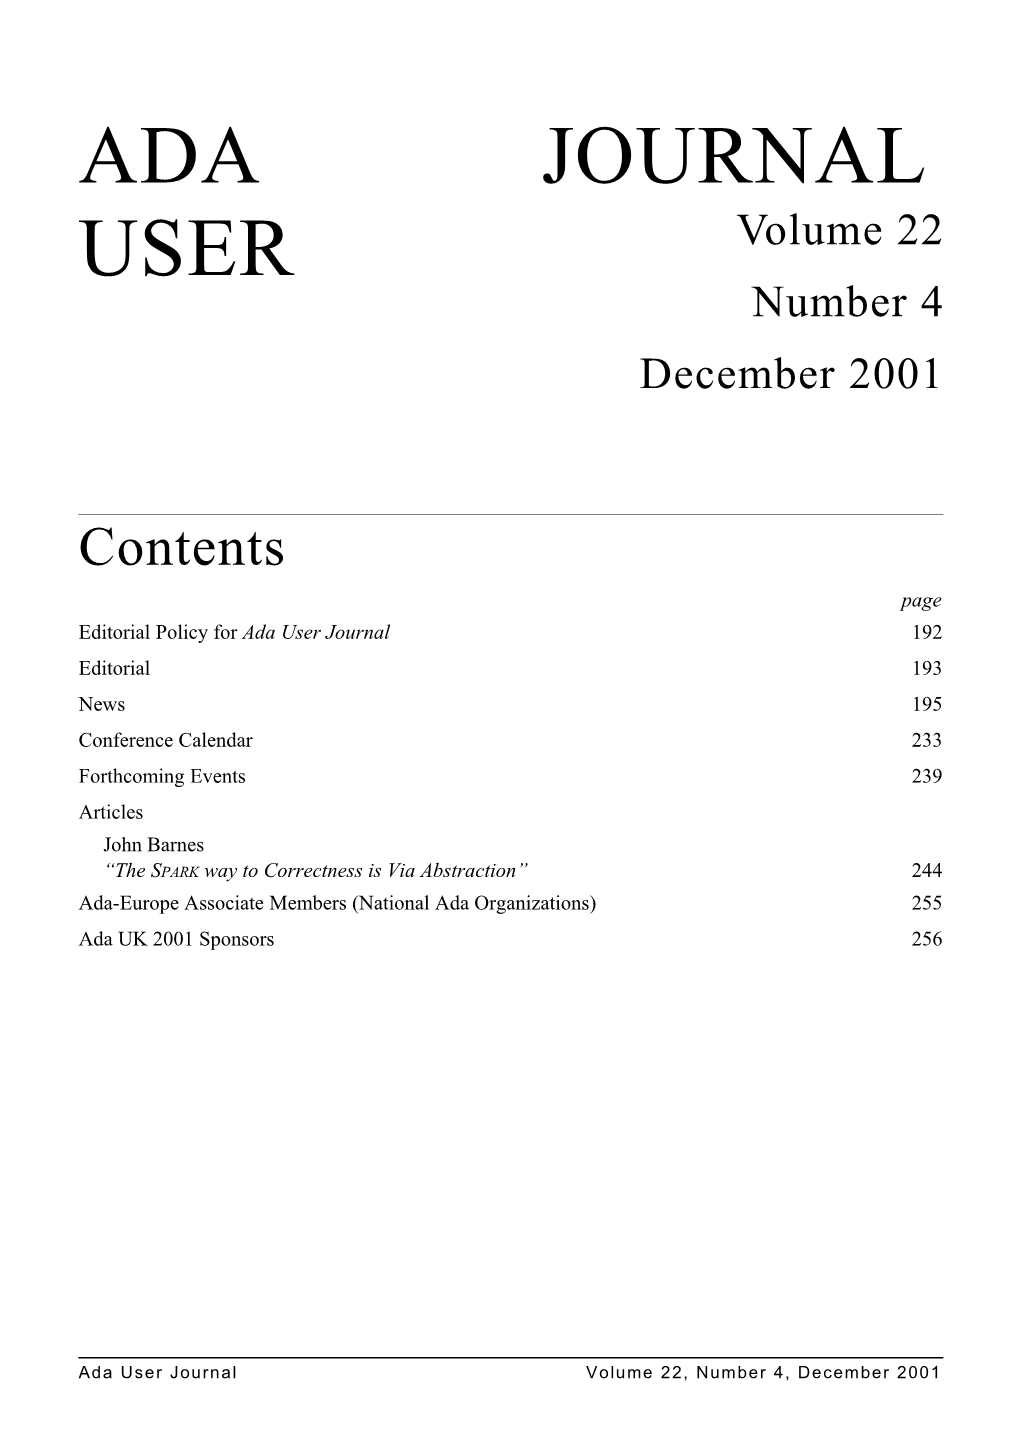 Ada User Journalvolume 22, Number 1, March 2001